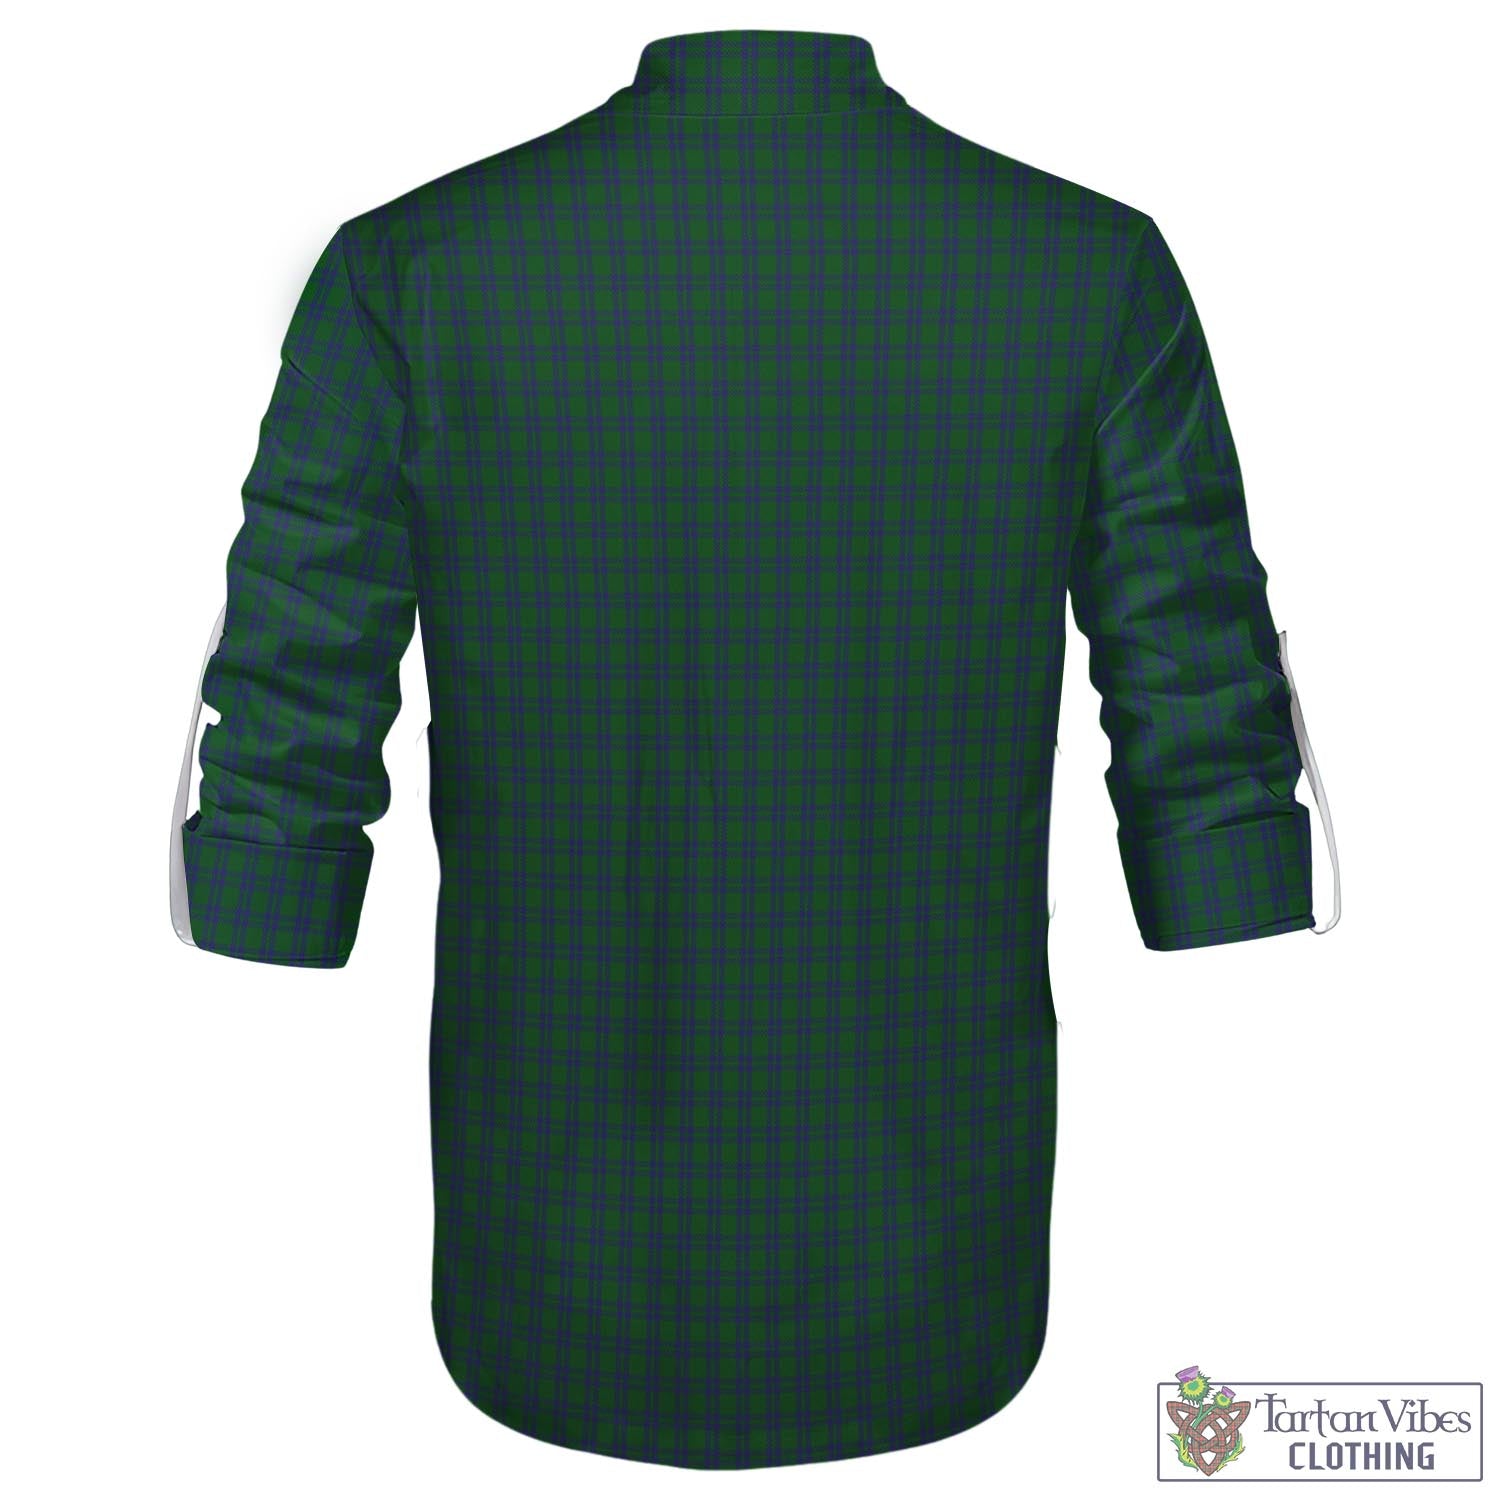 Tartan Vibes Clothing Montgomery Tartan Men's Scottish Traditional Jacobite Ghillie Kilt Shirt with Family Crest